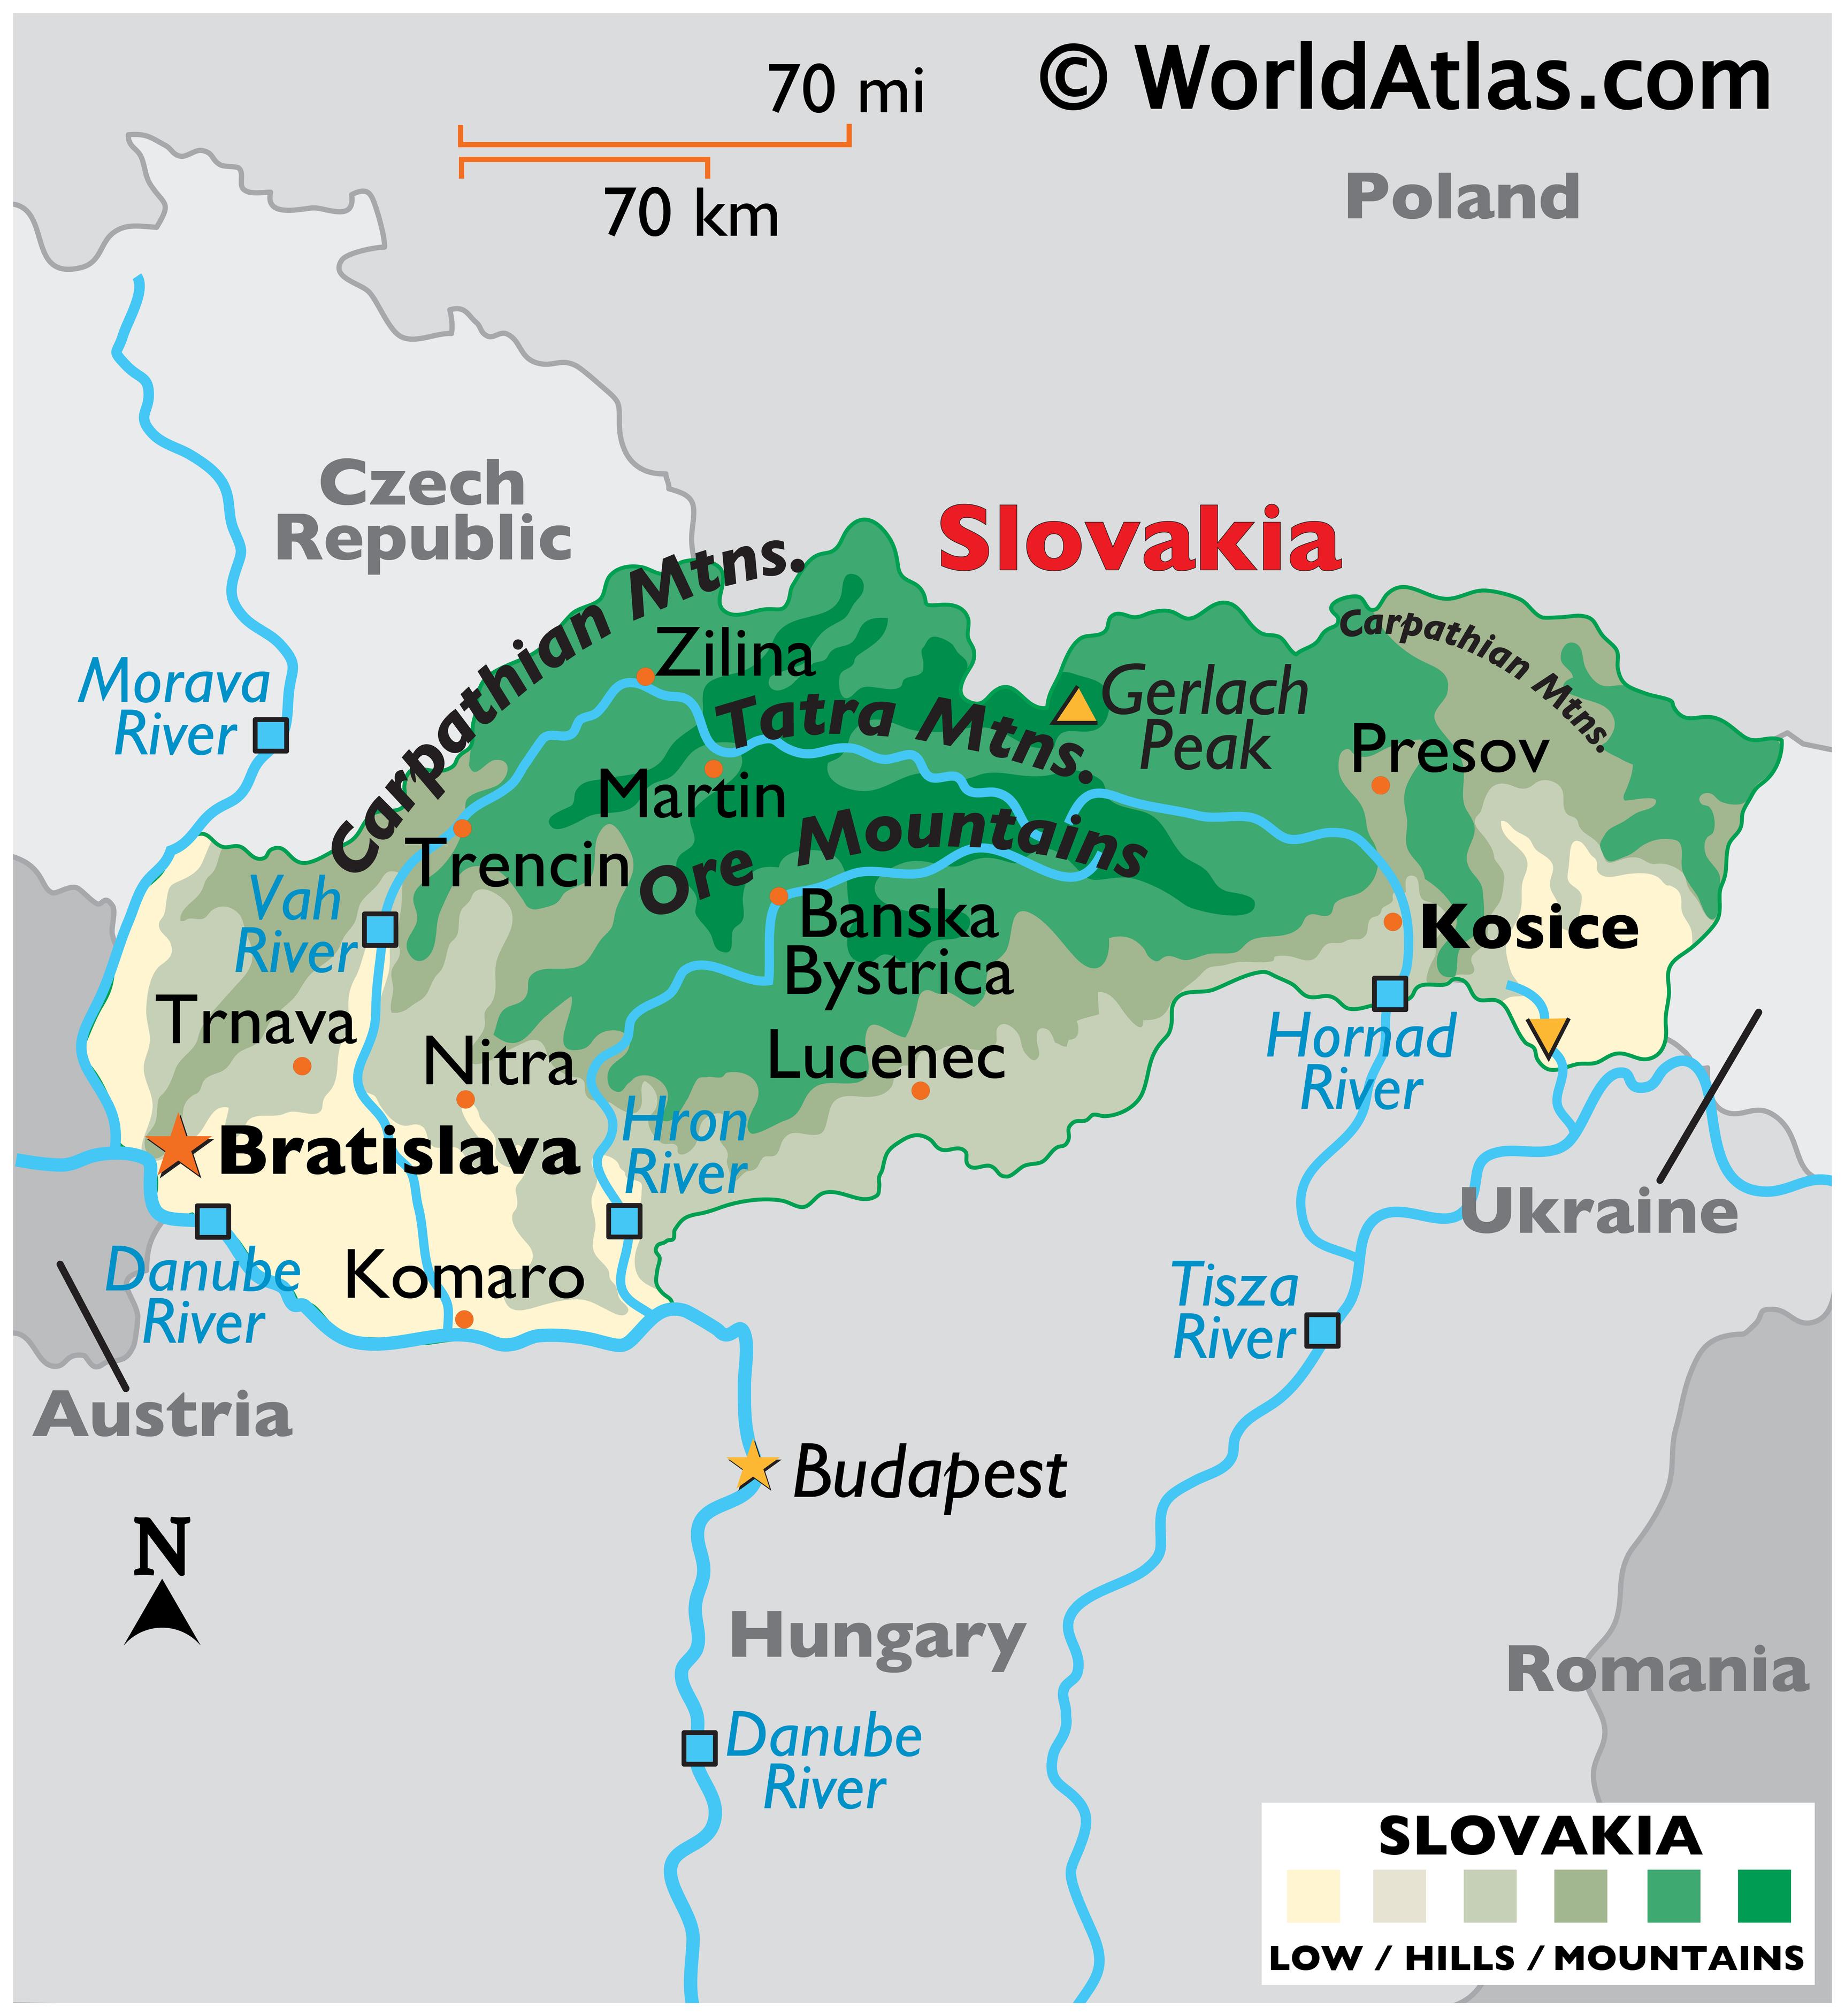 Slovakia Maps & Facts - World Atlas